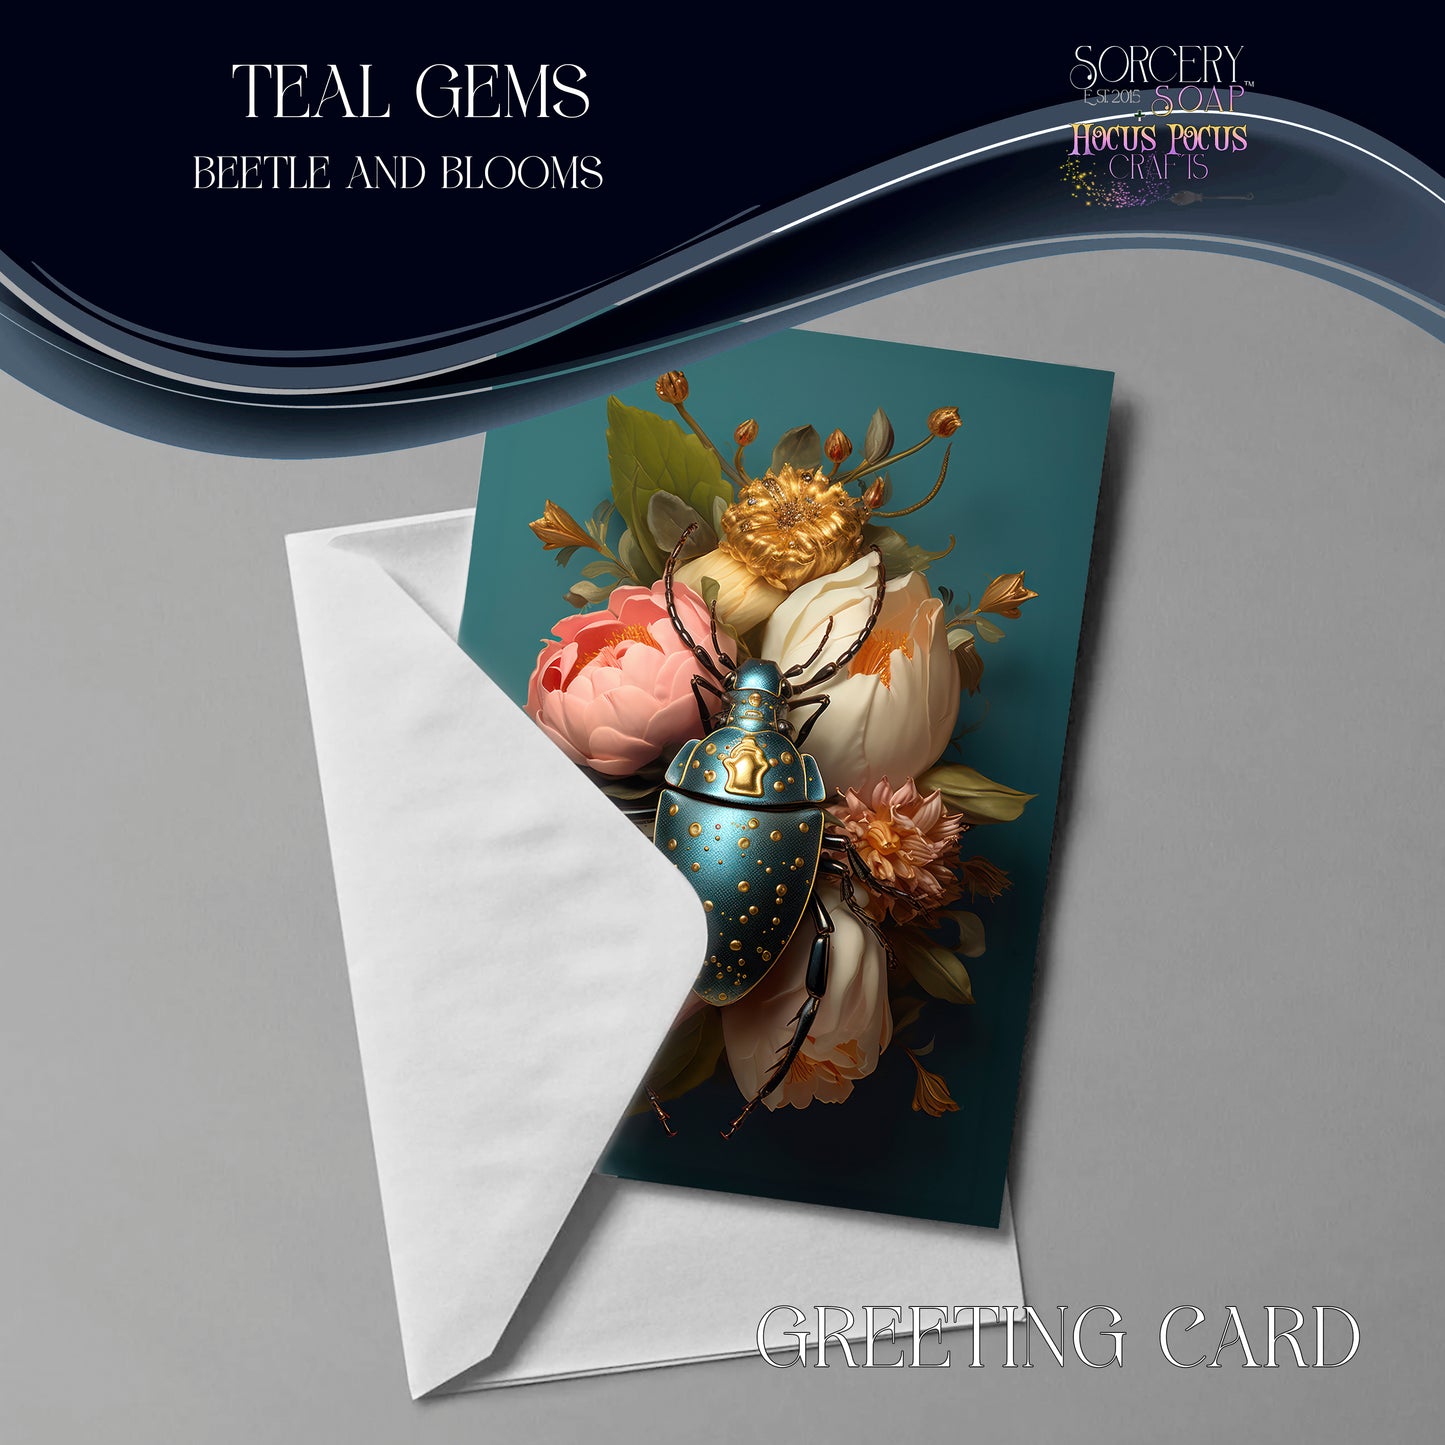 Teal Gems: Beetle and Blooms Greeting Card